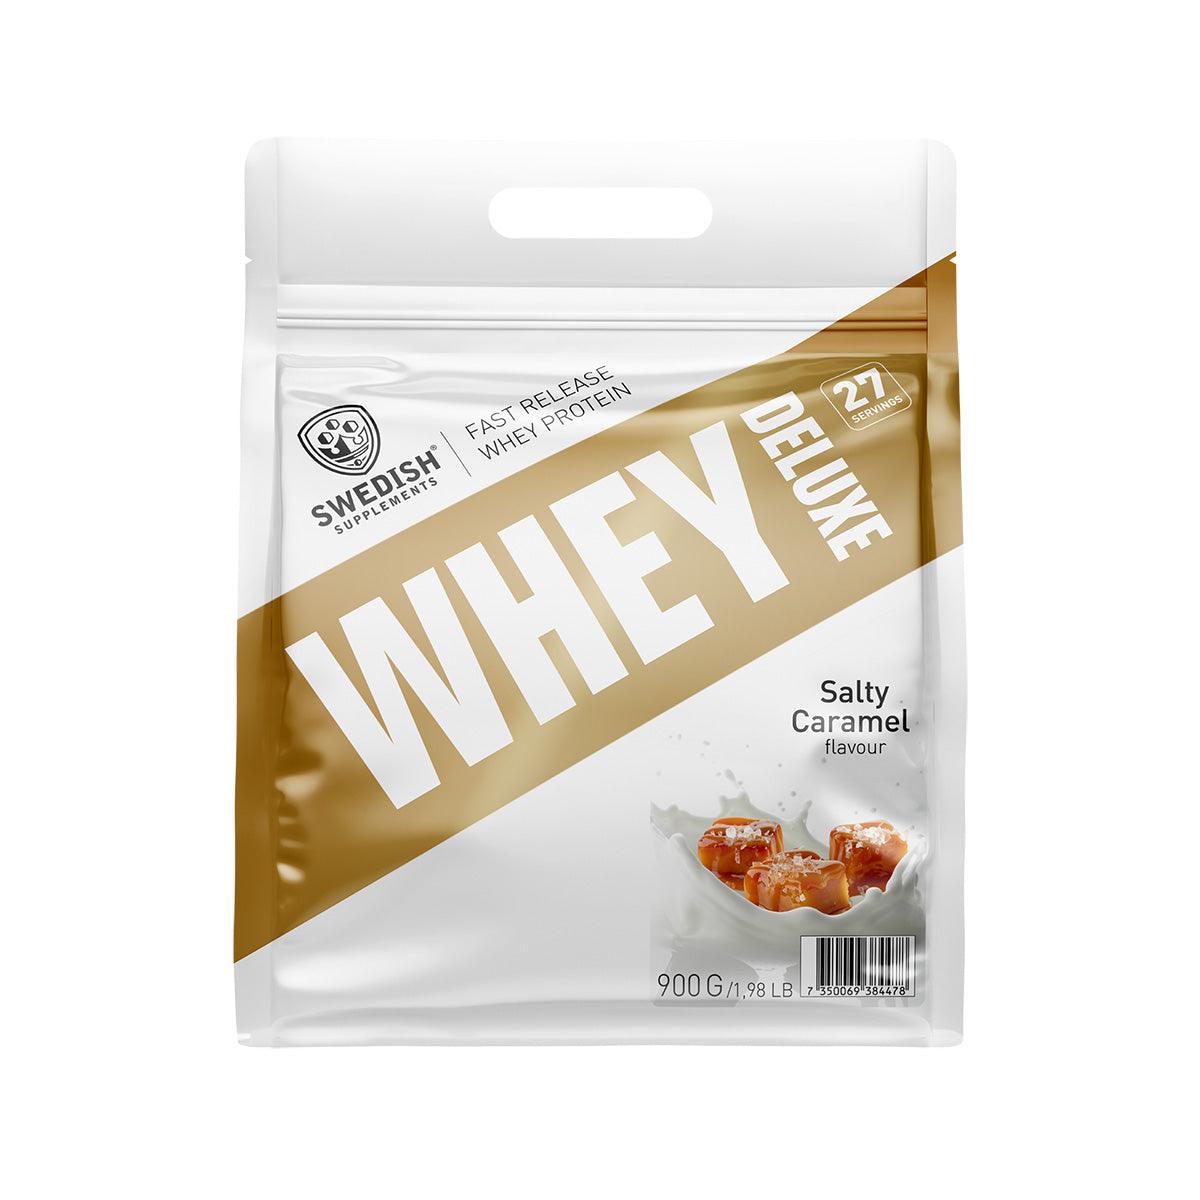 Swedish Supplements Whey Protein Deluxe 900g Proteinpulver